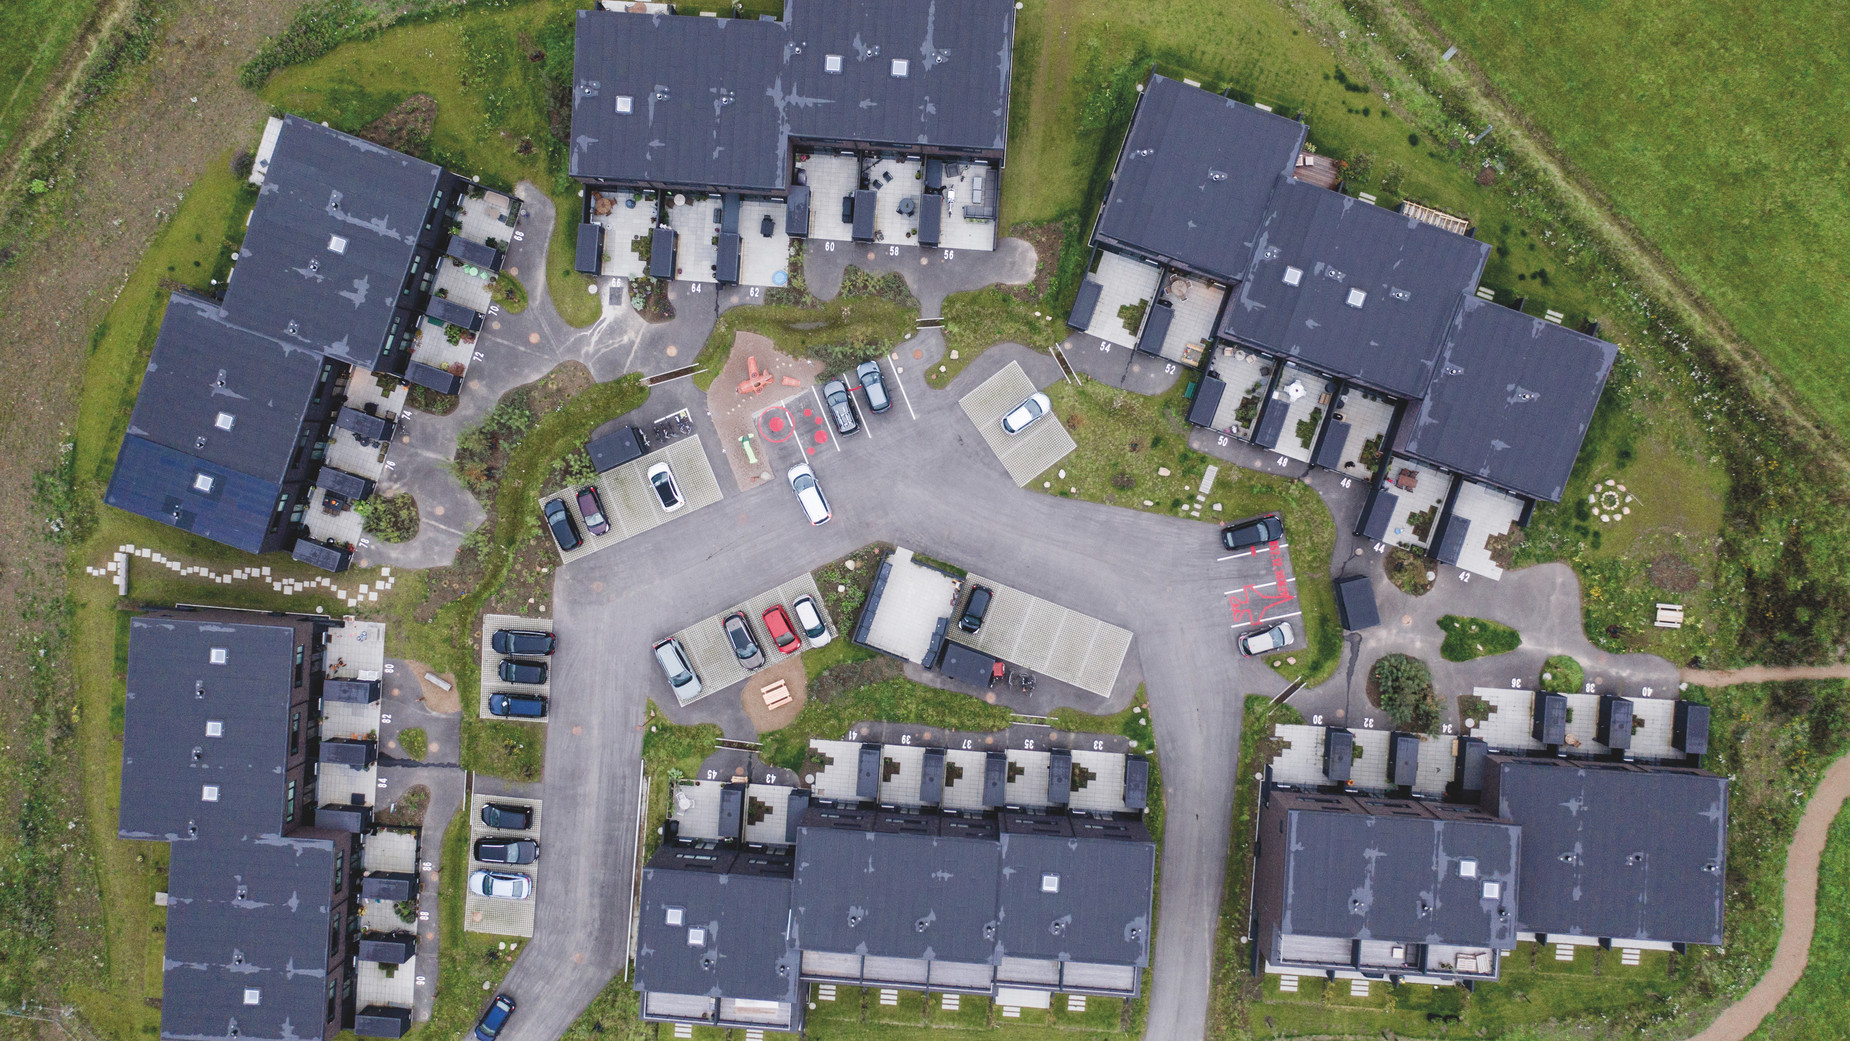 Residential Landscape Flyvestation Værløse